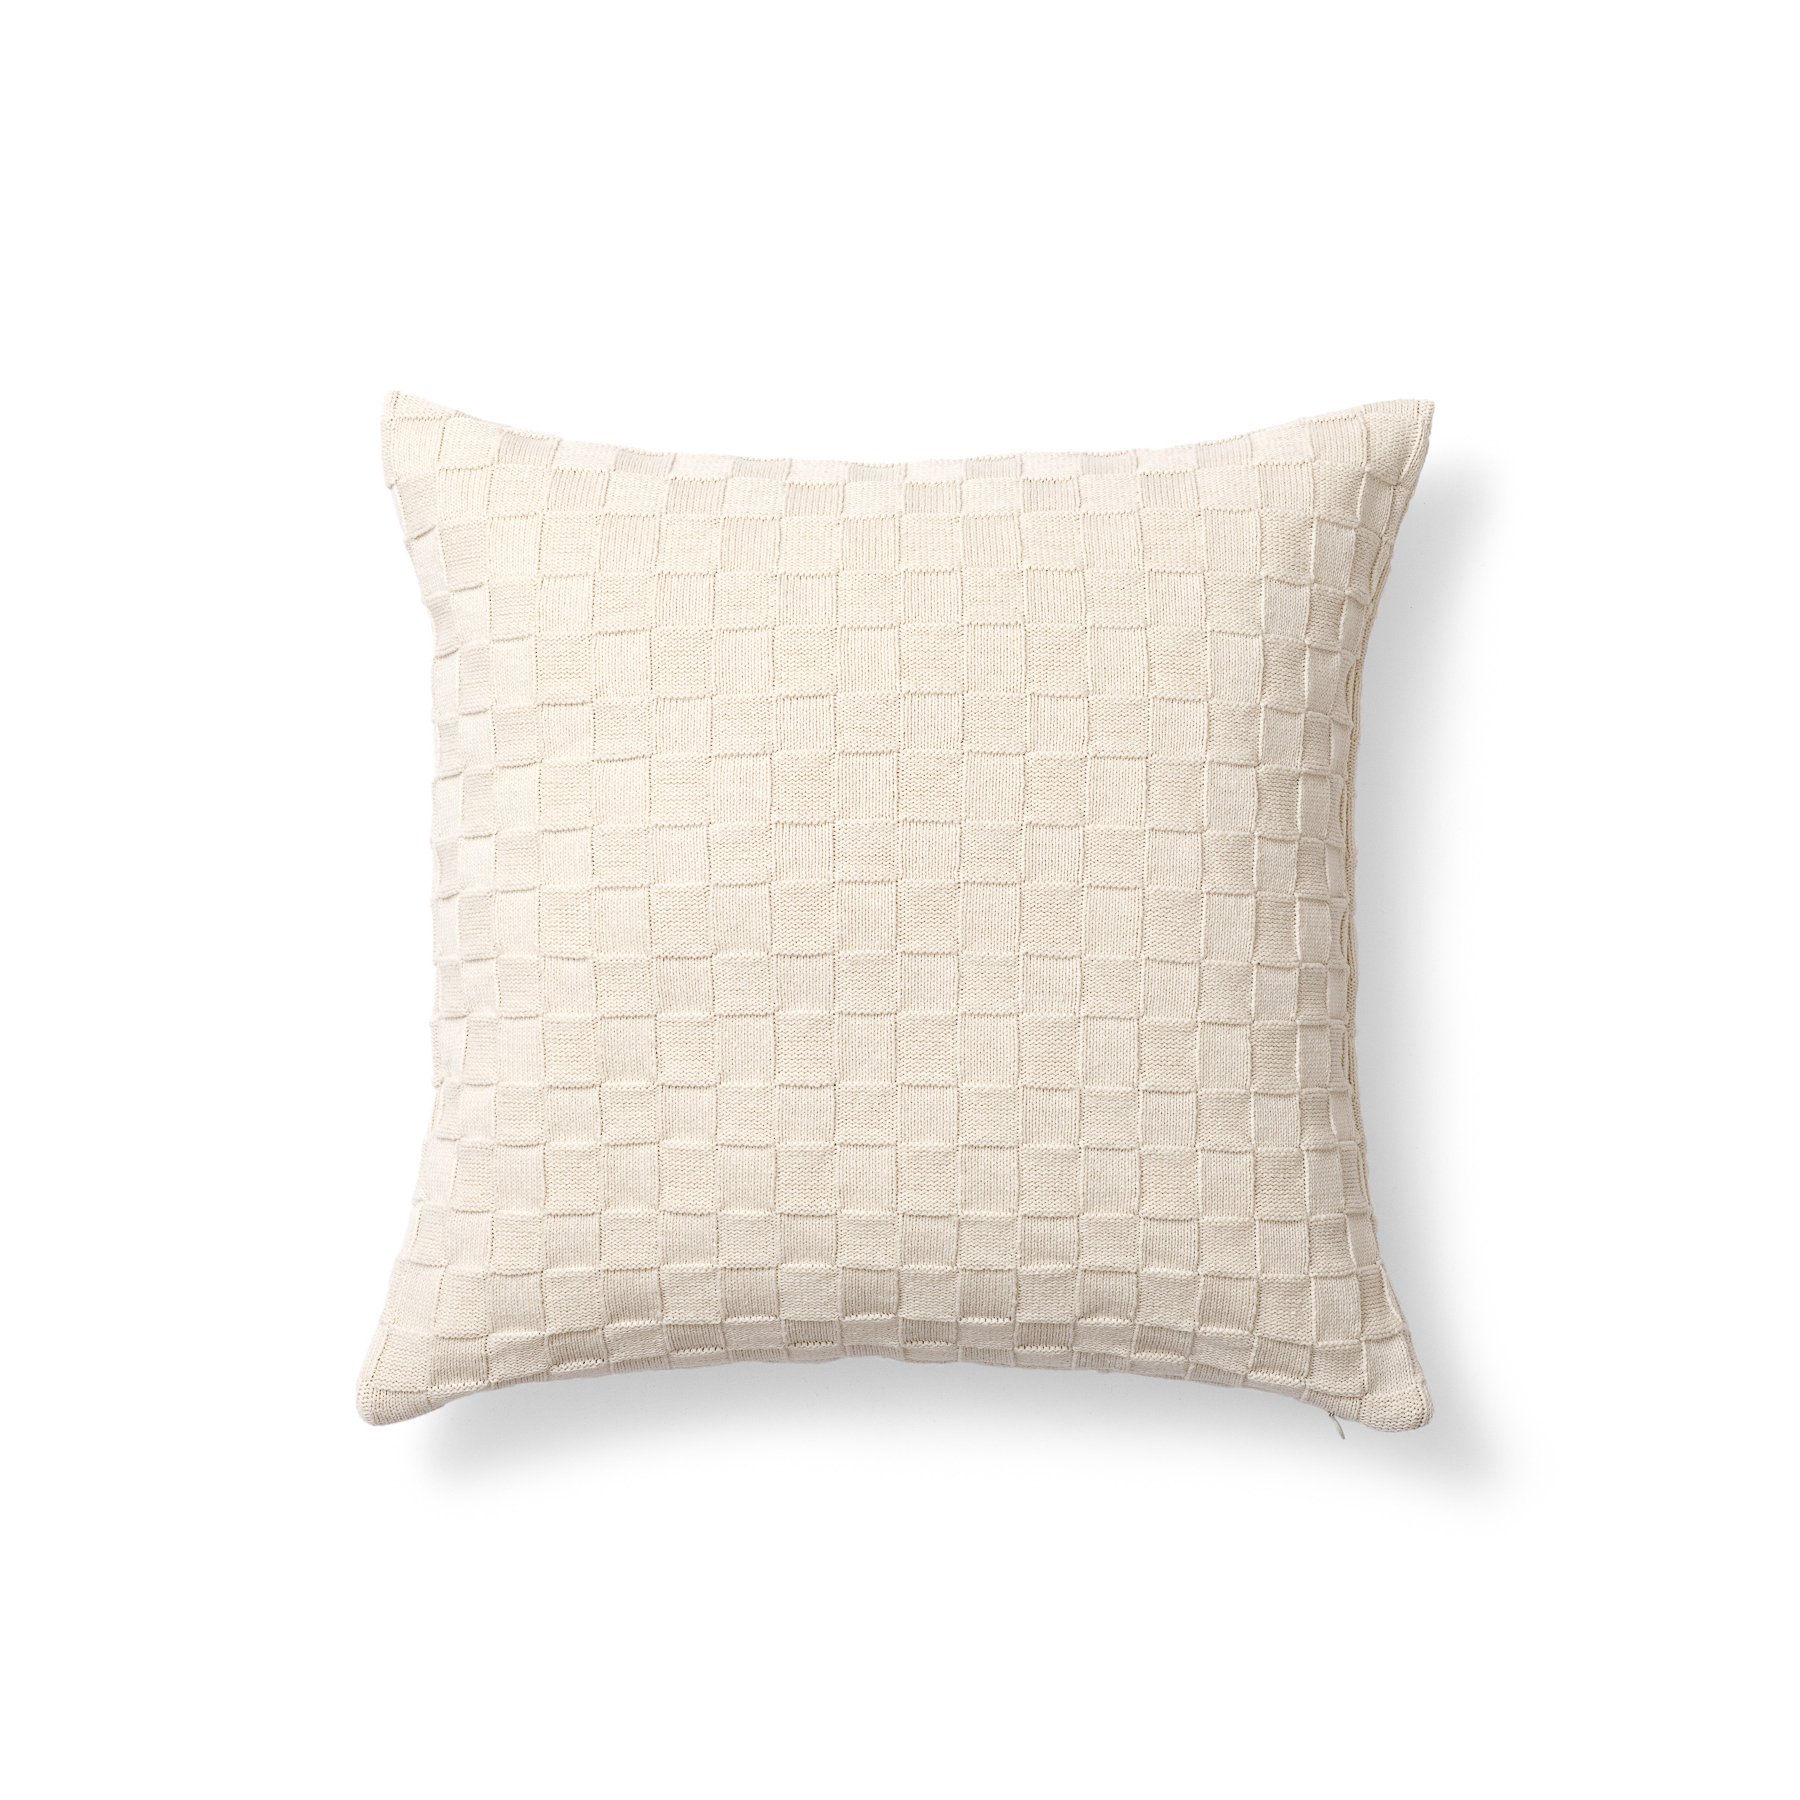 18x18" pillow big basketweave texture | greggio